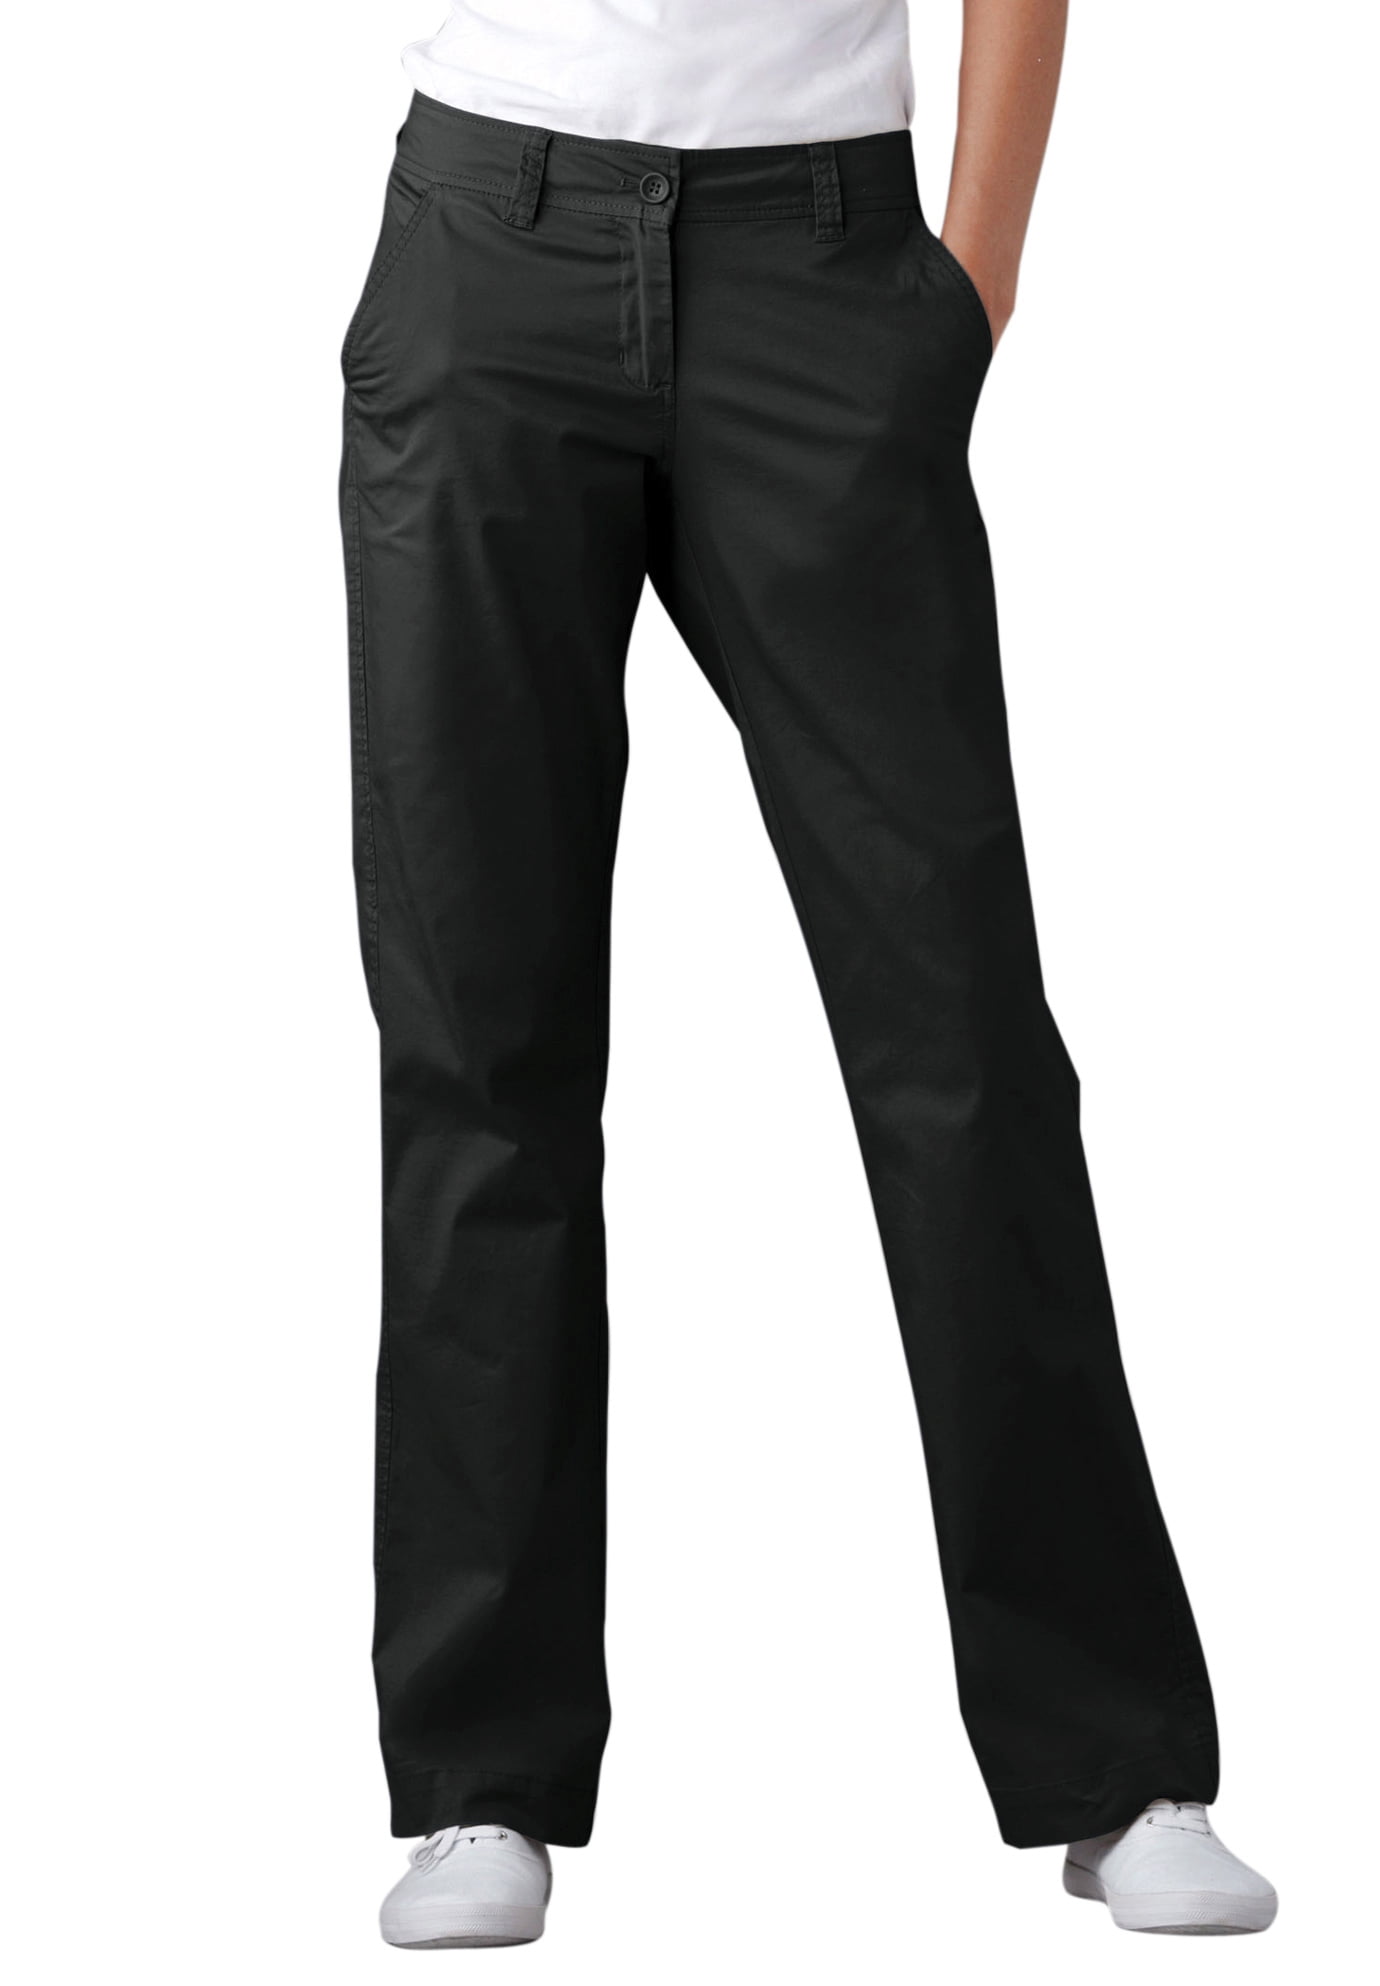 Ellos - ellos Women's Plus Size Classic Chino Pants - 28, Black